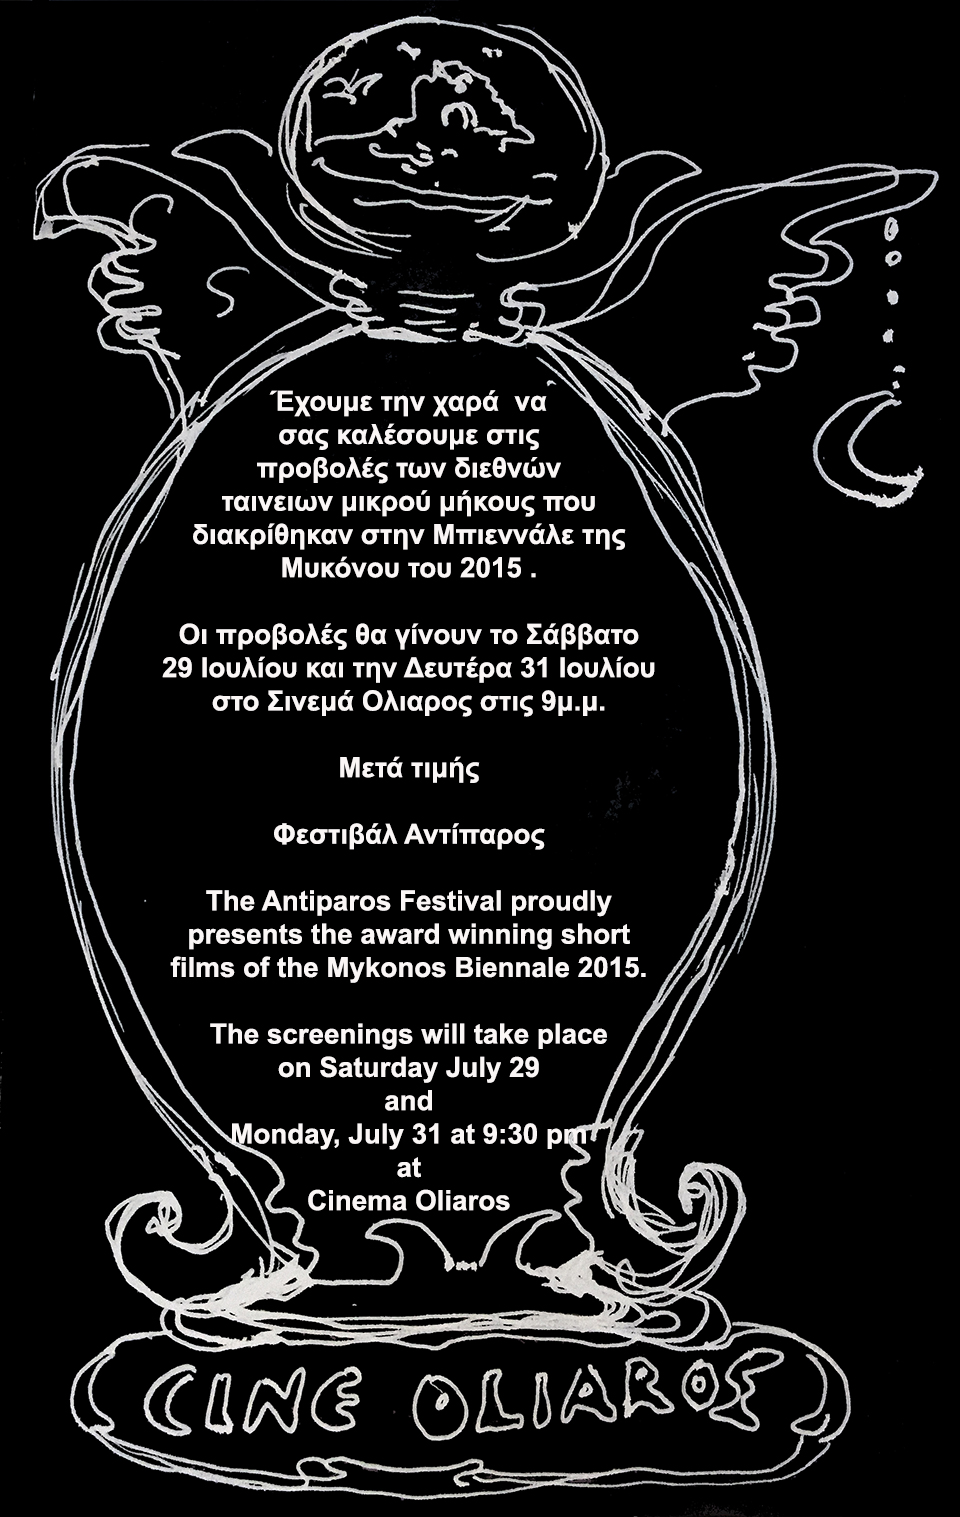 antiparos festival invite to the art project